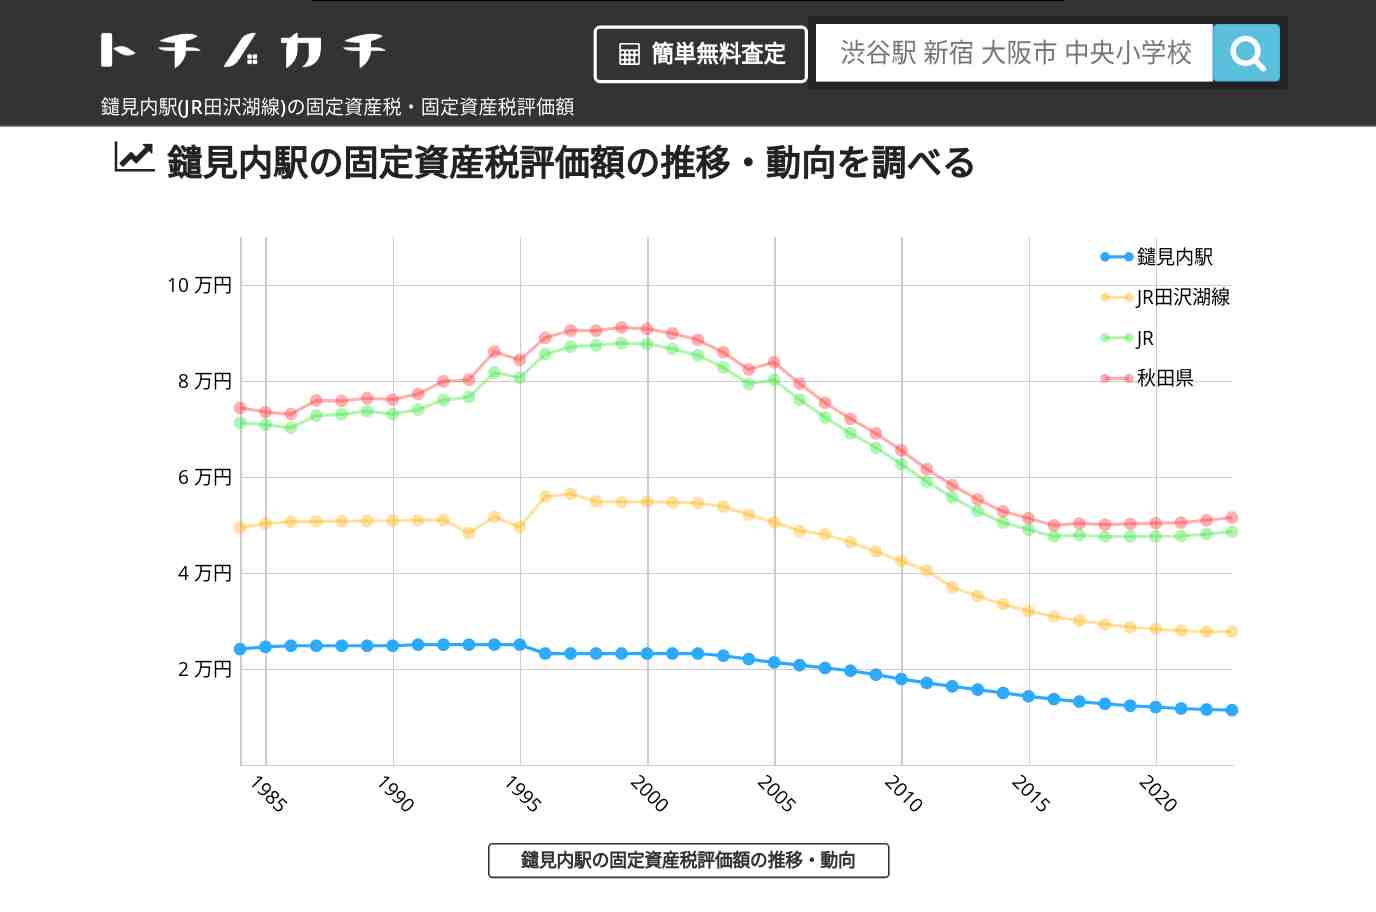 鑓見内駅(JR田沢湖線)の固定資産税・固定資産税評価額 | トチノカチ